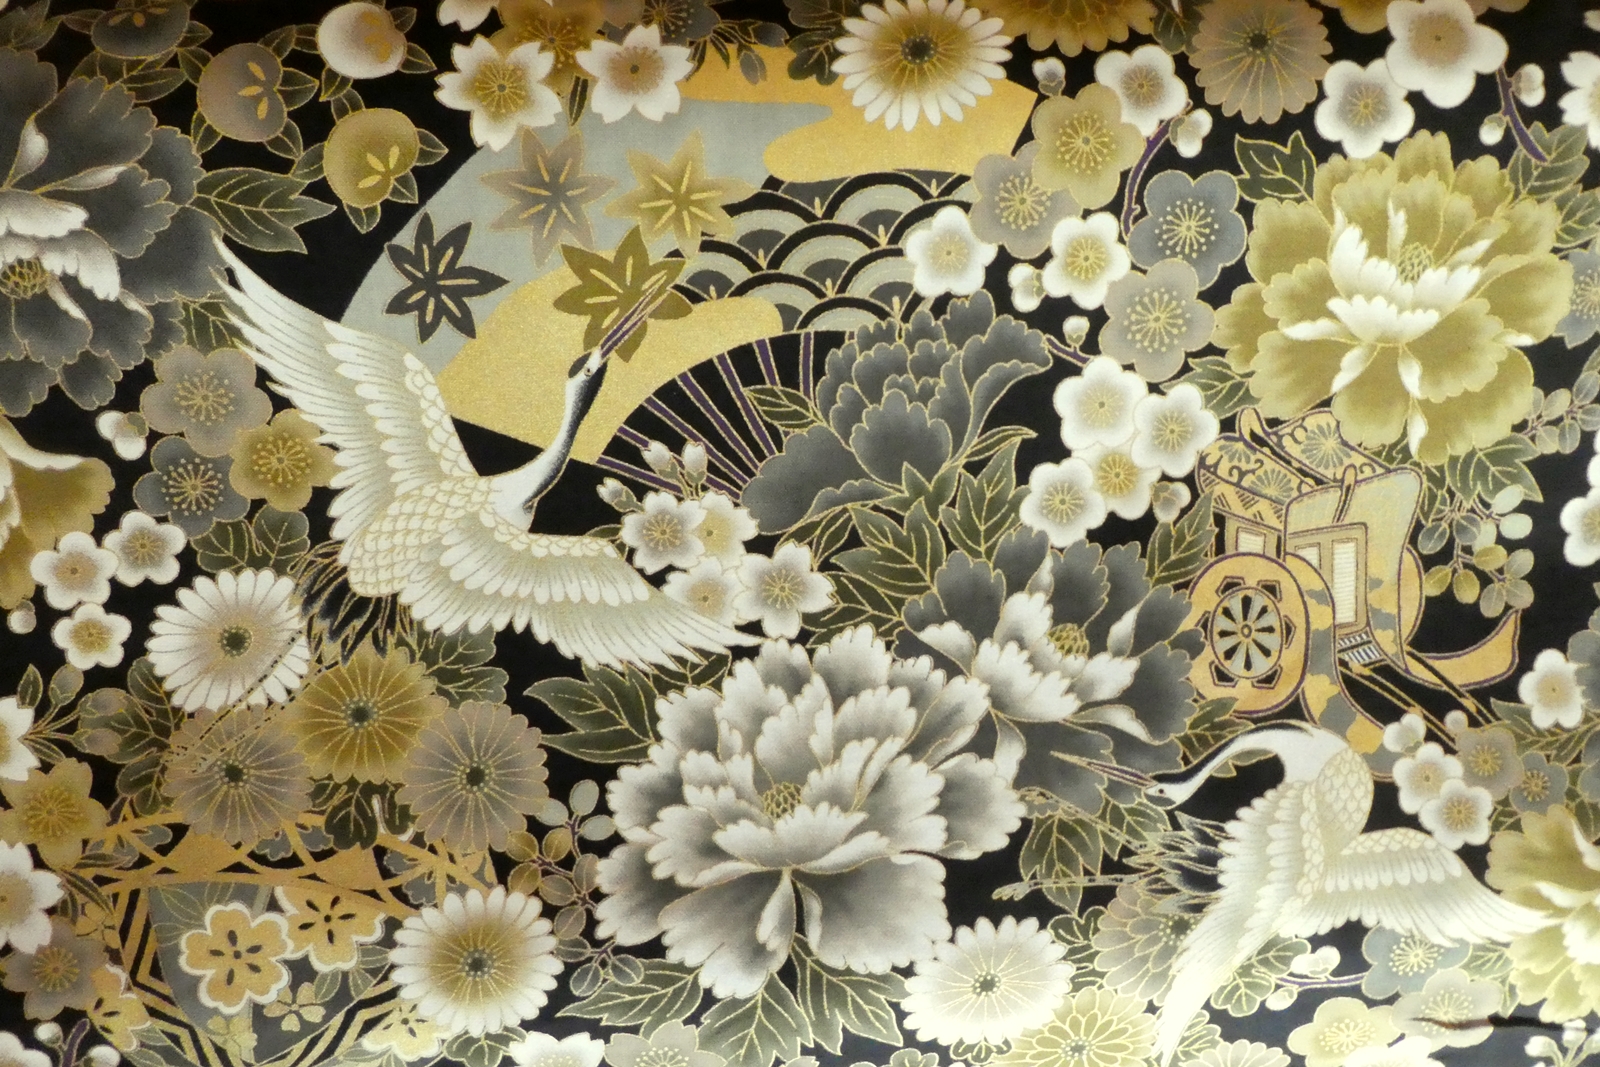 HJ2004 CRANE Sakura Chrysamsemum bird folding fan japanese pattern Gold & Silver 36M